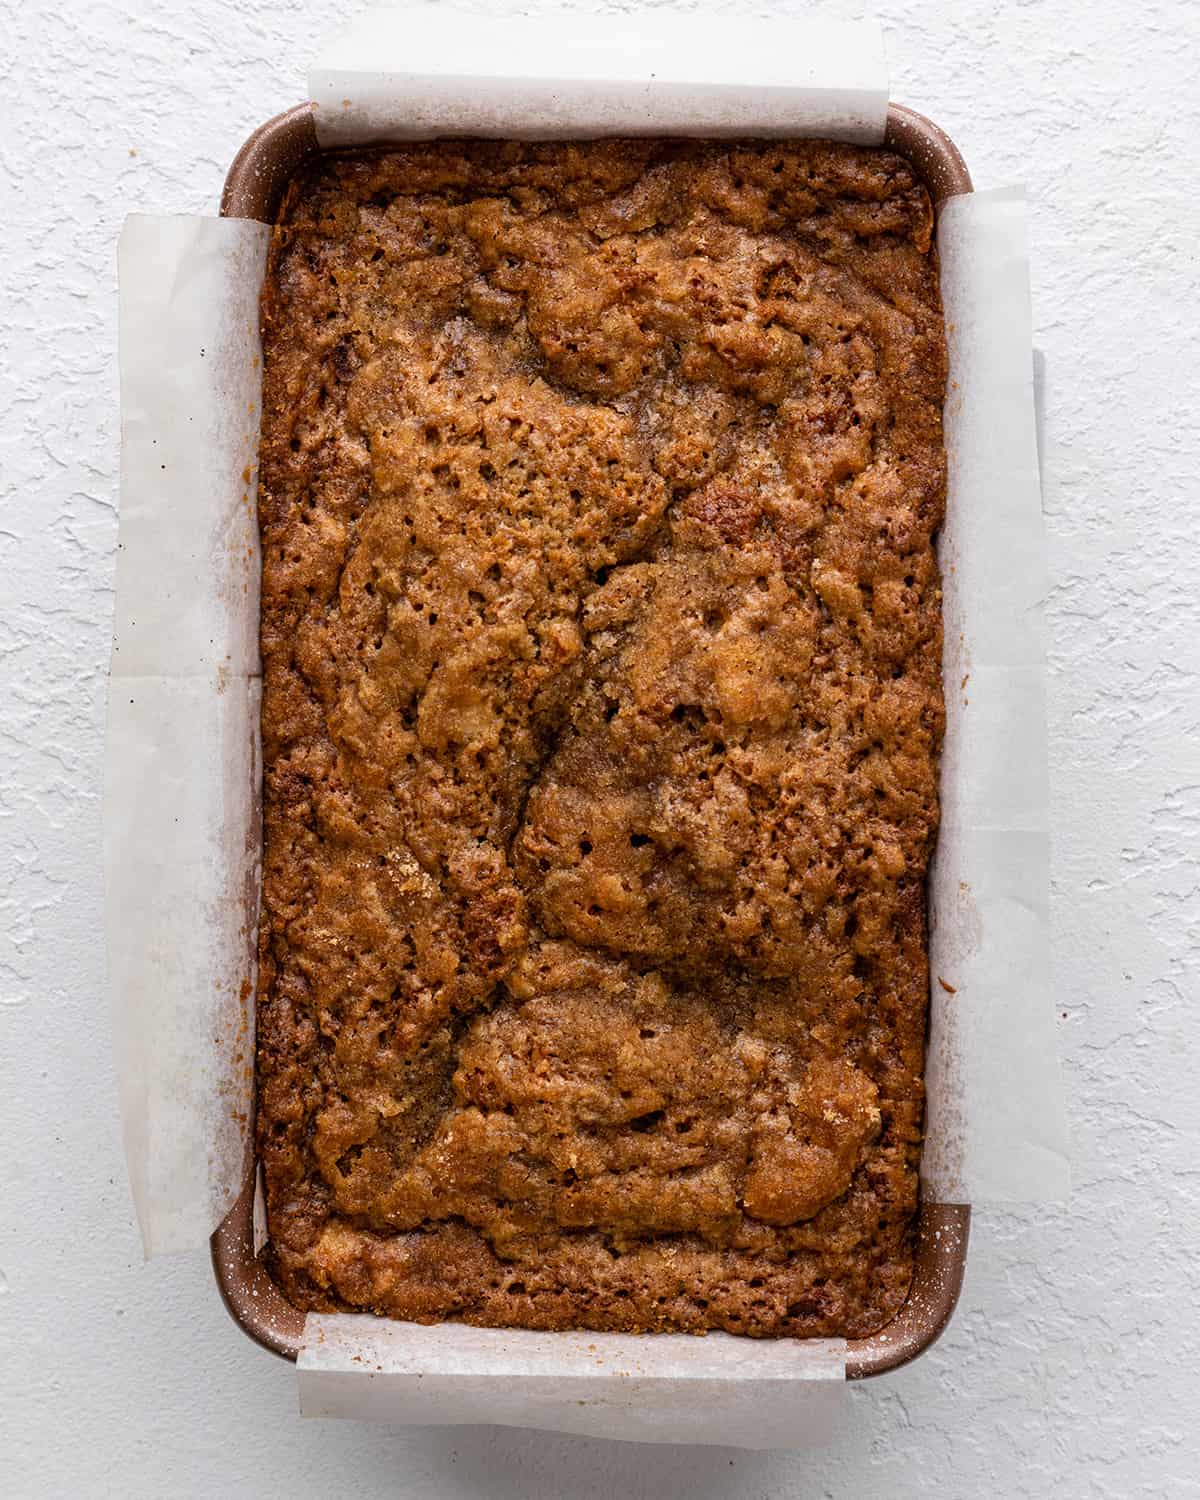 cinnamon apple bread in a baking pan after baking